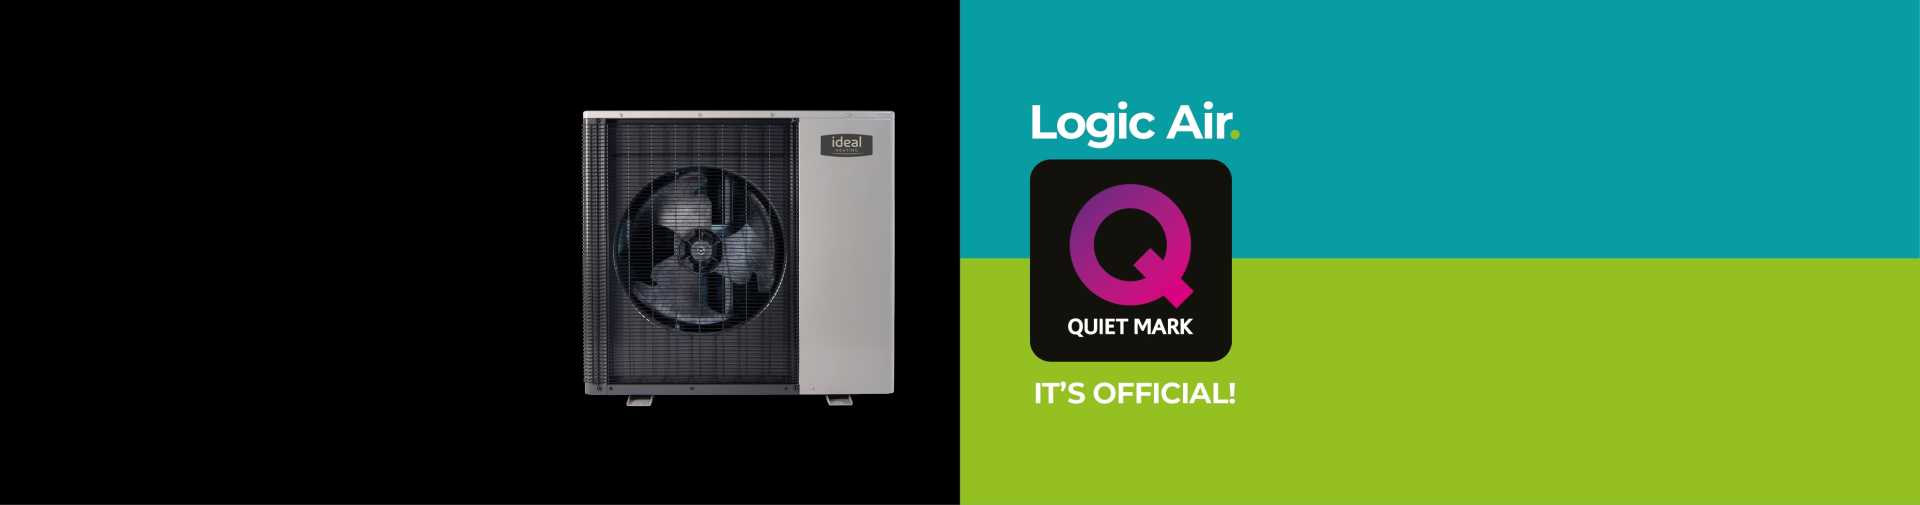 IHD 230705 Quiet Mark Logic Air Header v1